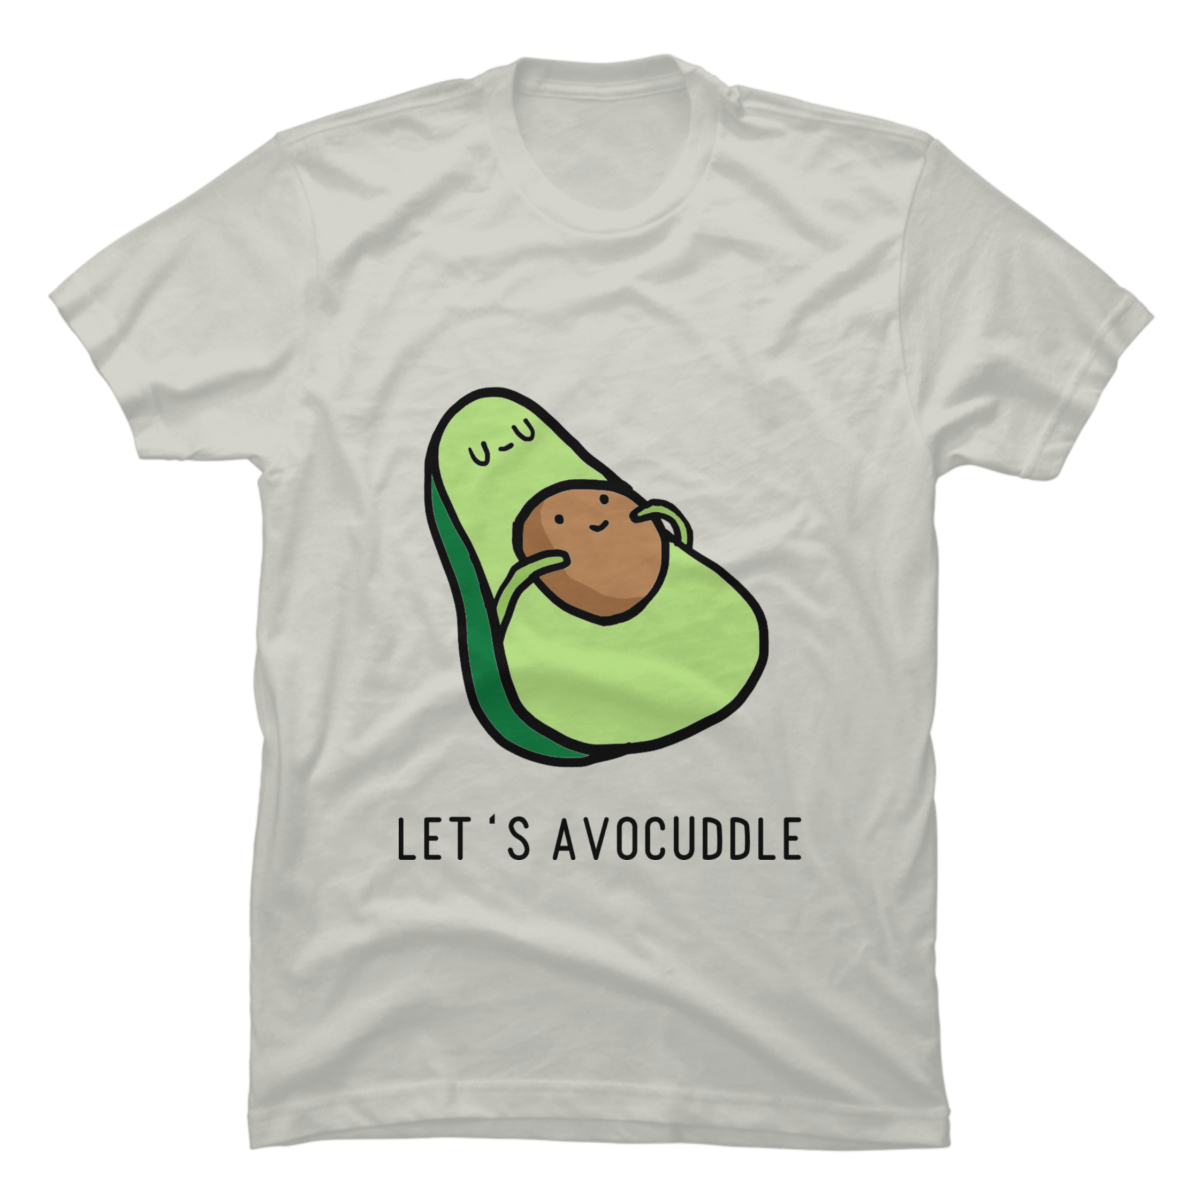 let's avocuddle shirt